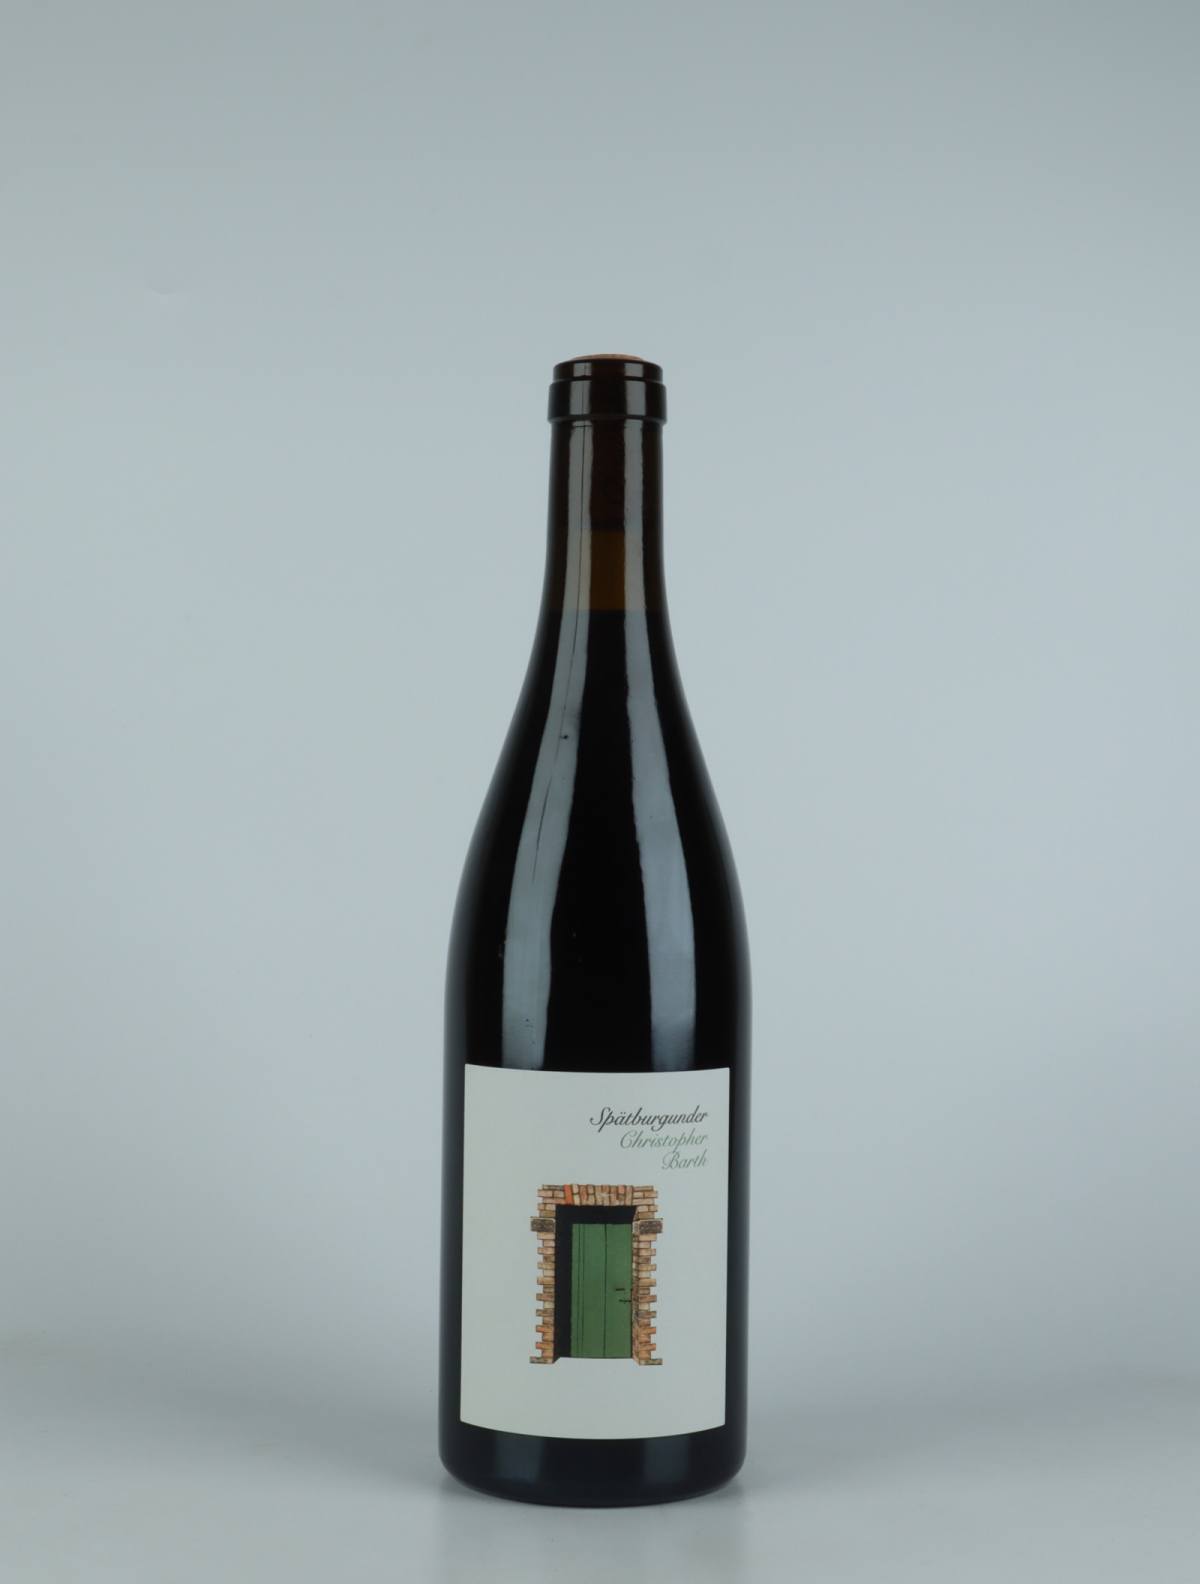 En flaske N.V. Spätburgunder (18/19/20) Rødvin fra Christopher Barth, Rheinhessen i Tyskland